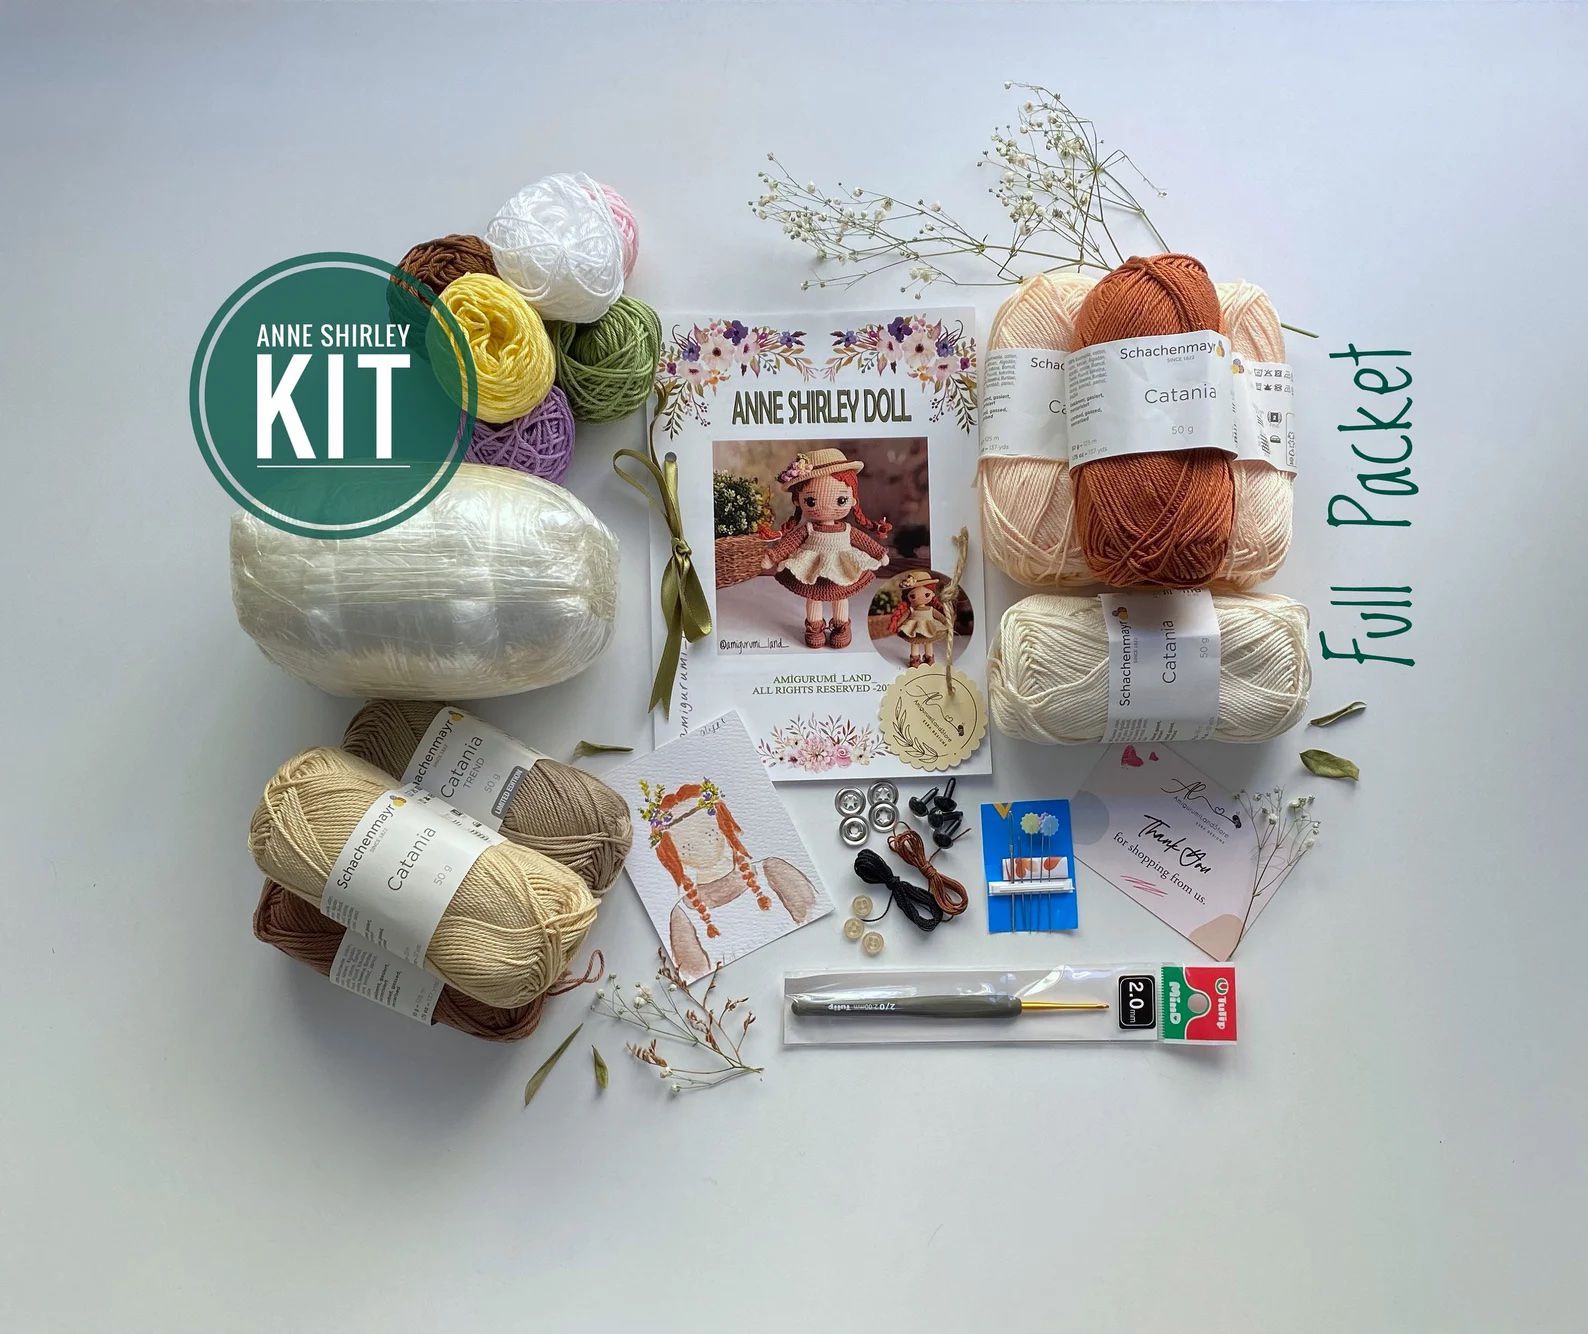 crochet kit to make an anne shirley doll